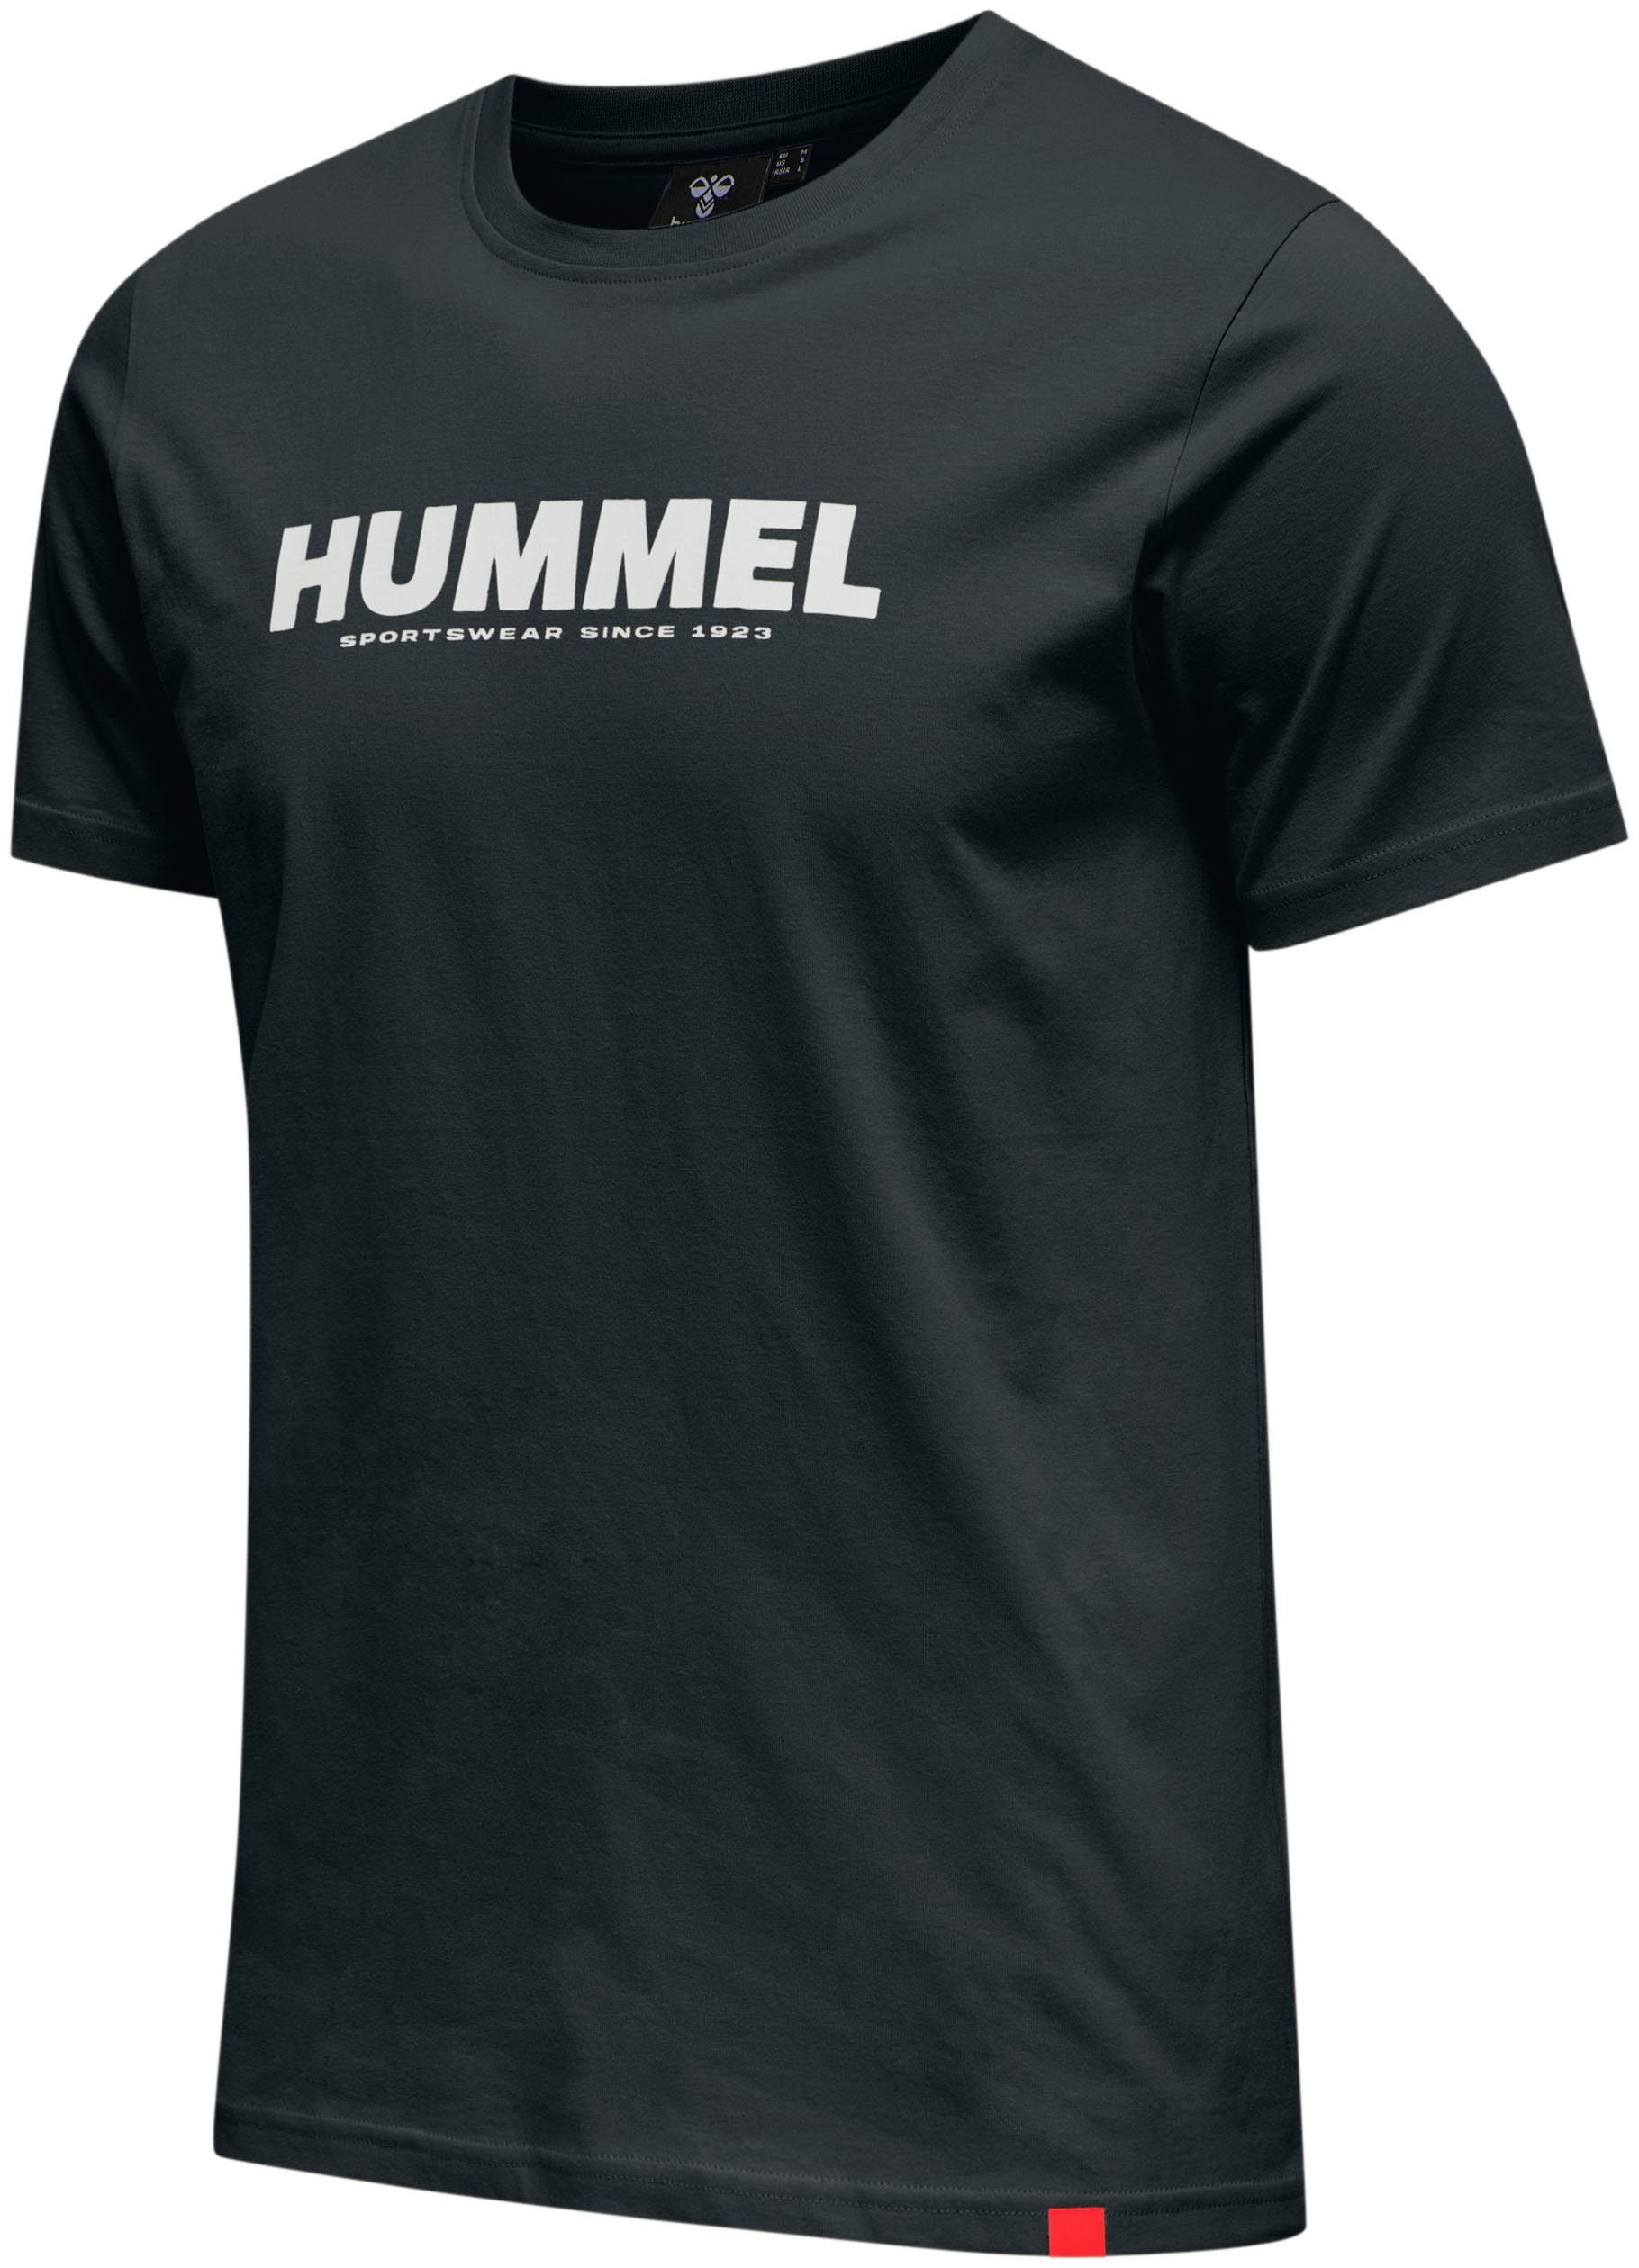 hummel Logo T-Shirt schwarz mit Print